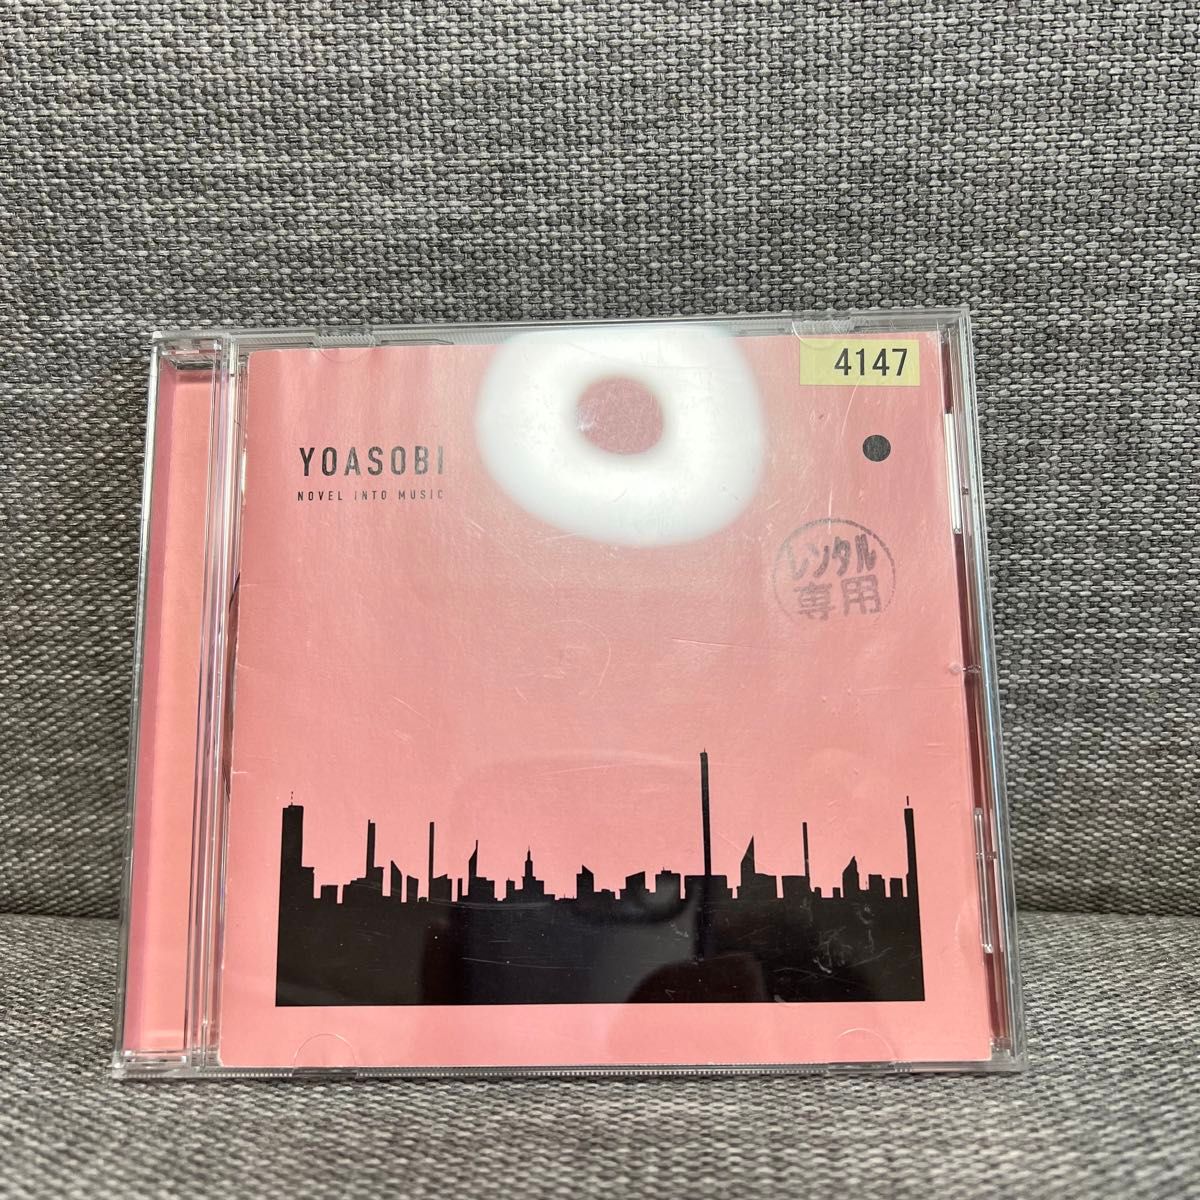 THE BOOK YOASOBI CD ヨアソビ アルバムレンタル限定盤｜Yahoo!フリマ